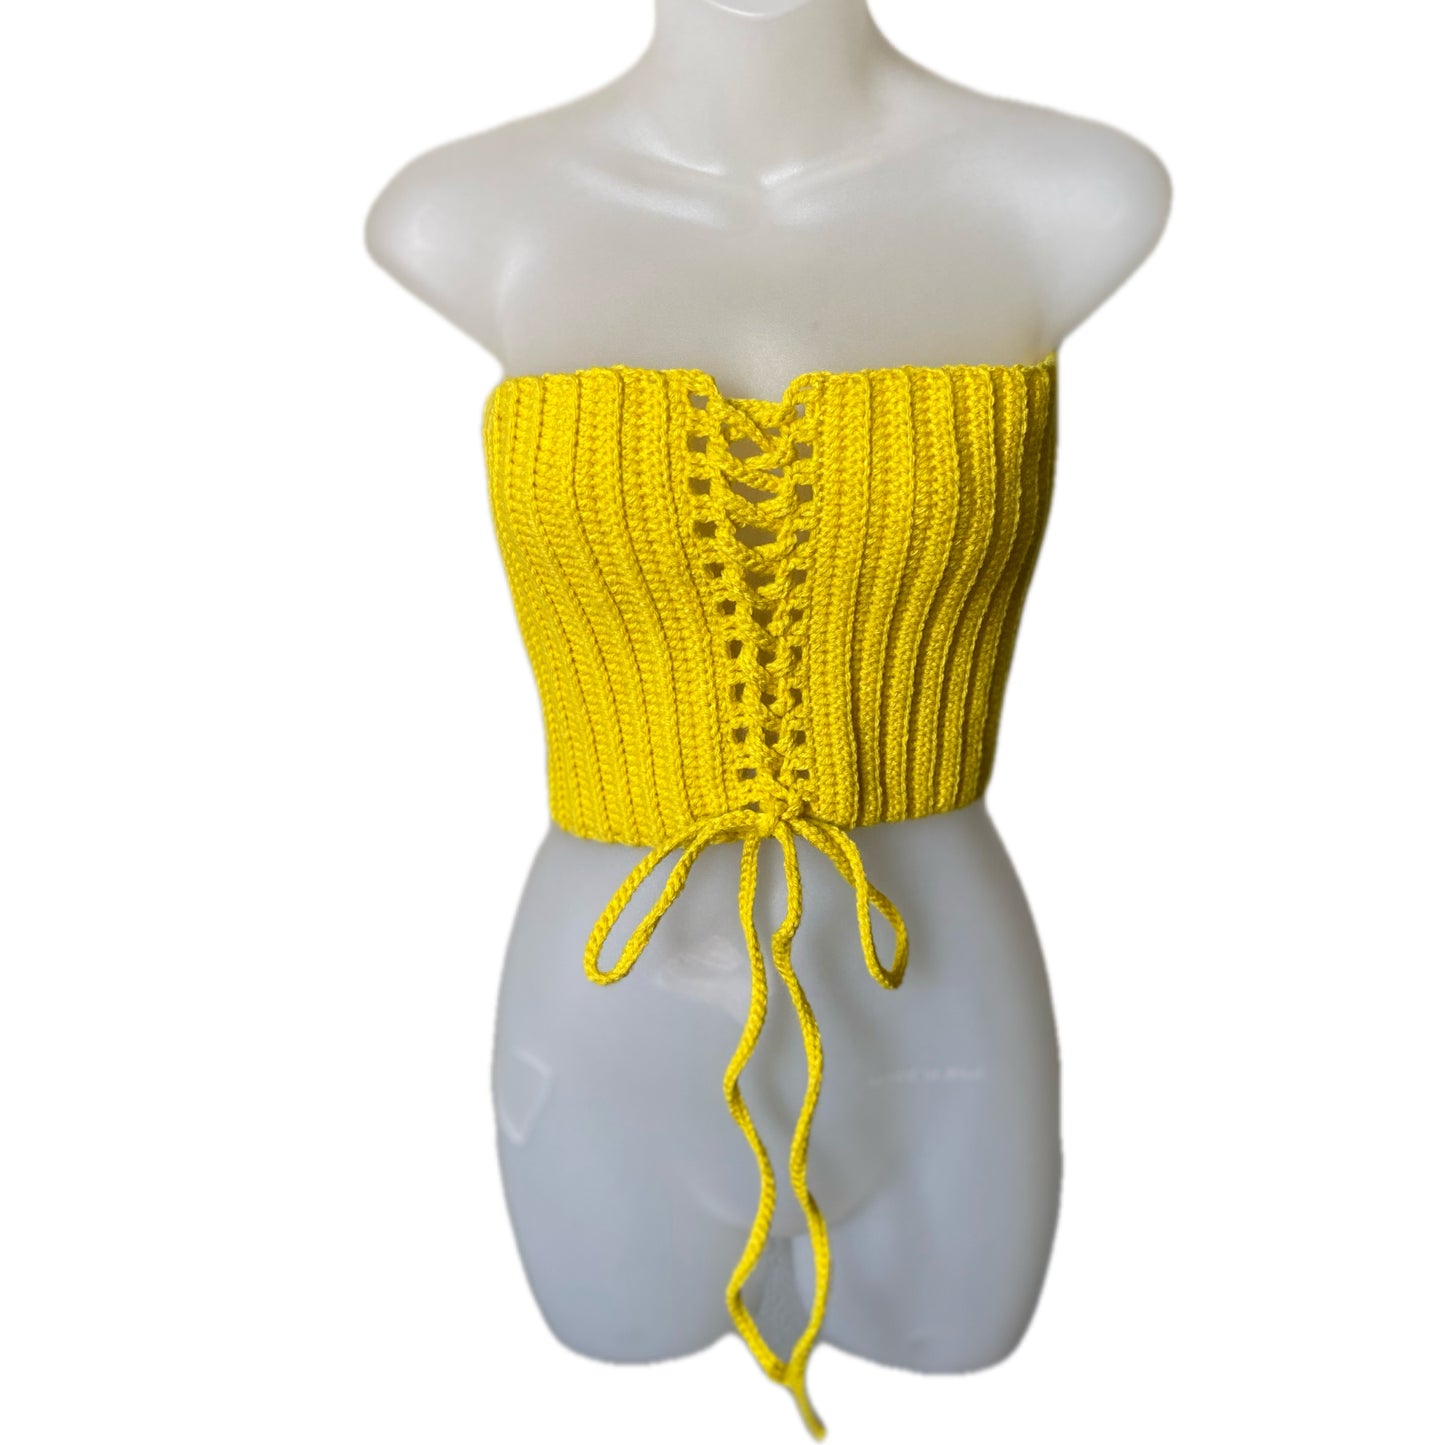 ShopDigitalGirl | Crochet Tops | Chartreuse Tube Top